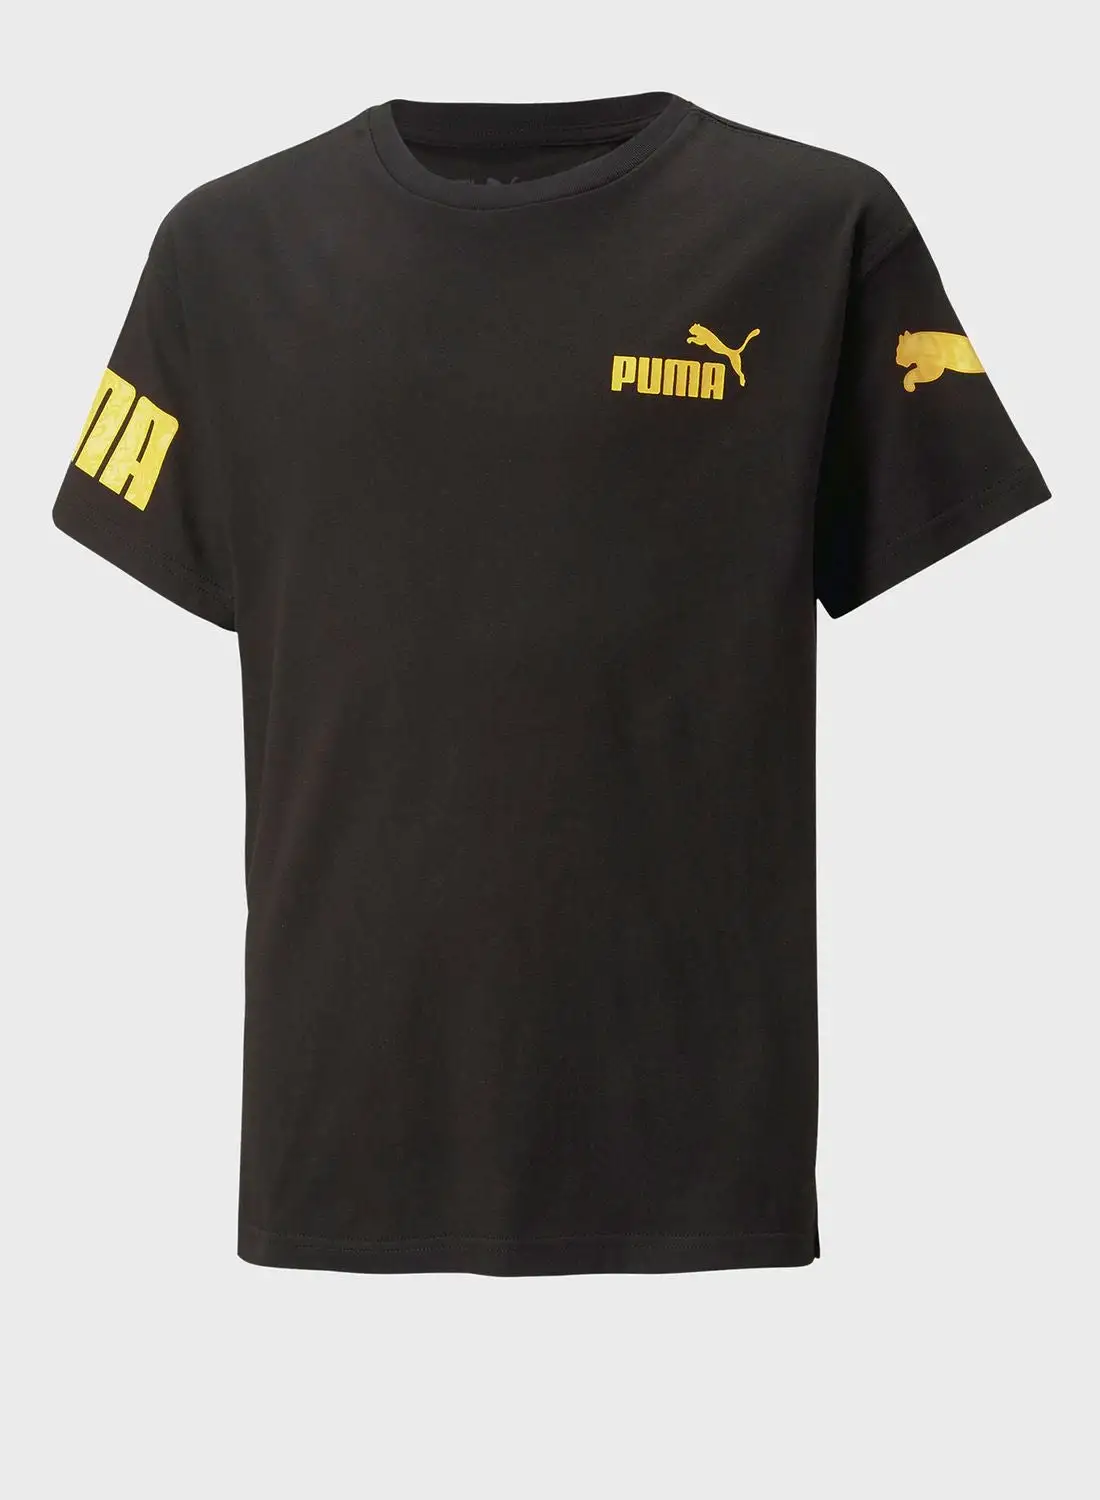 PUMA Youth Power Summer T-Shirt